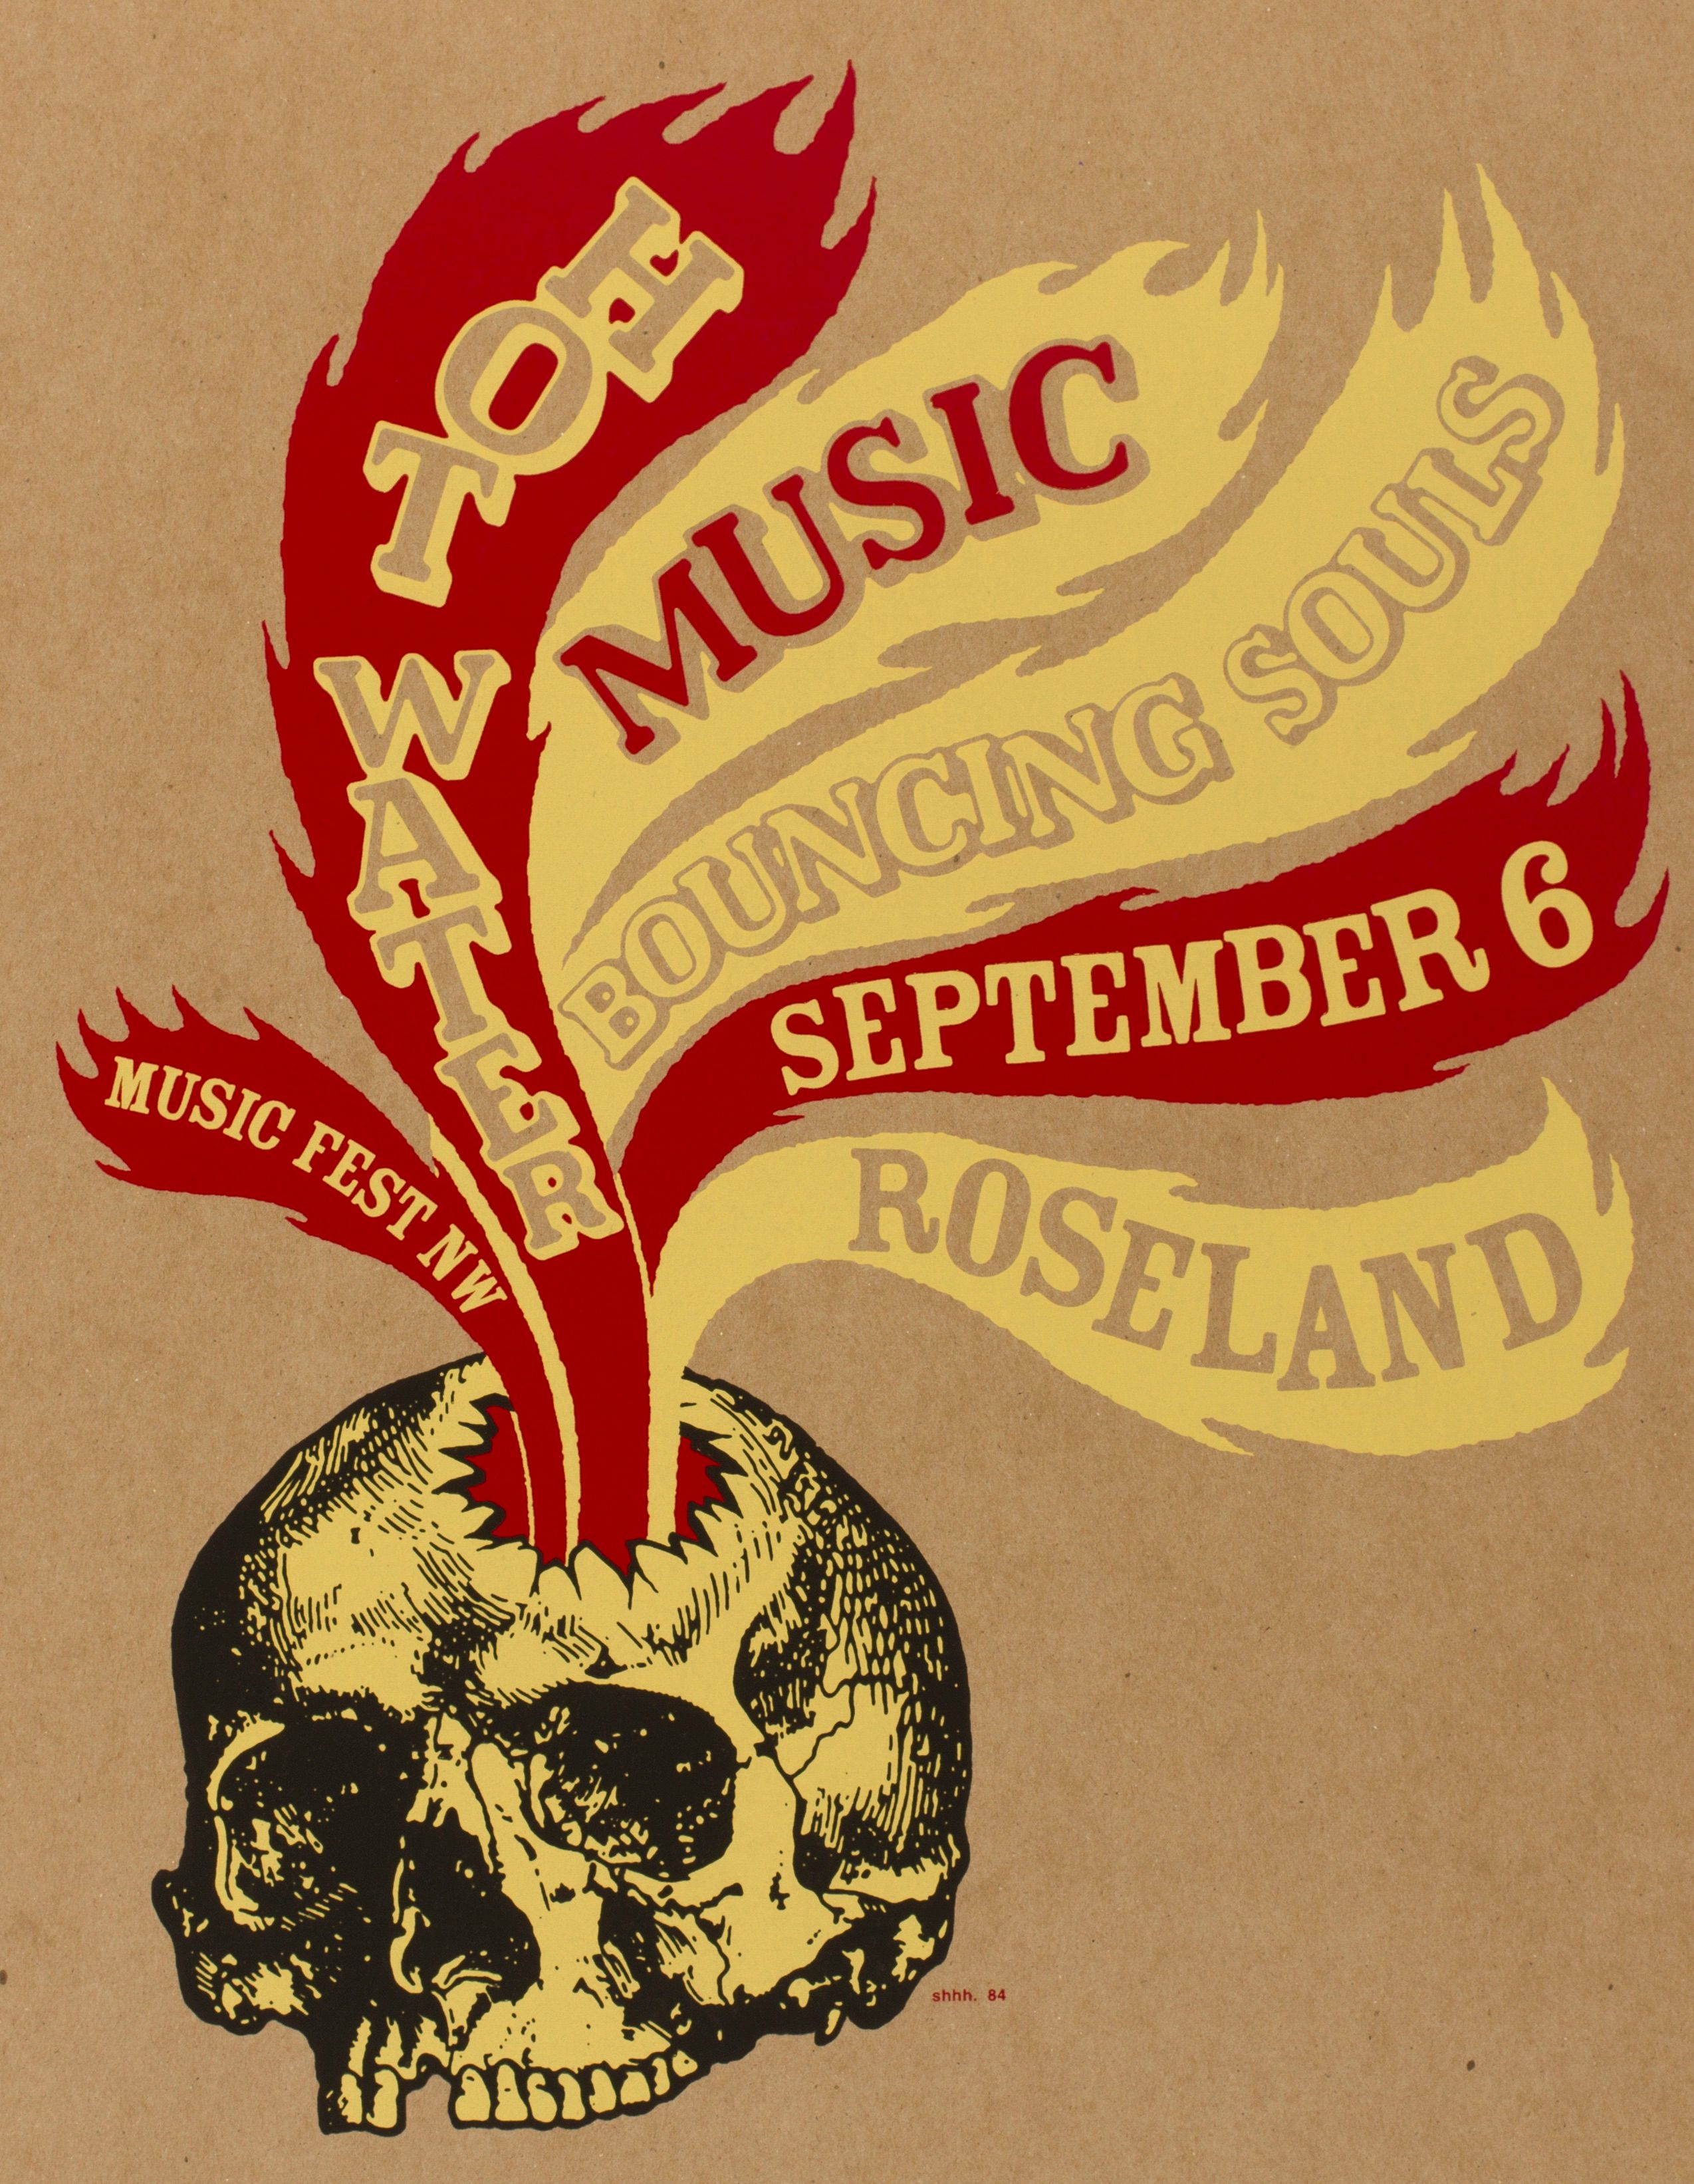 MXP-109.6 Hot Water Music 2008 Roseland Theater  Sep 6 Concert Poster